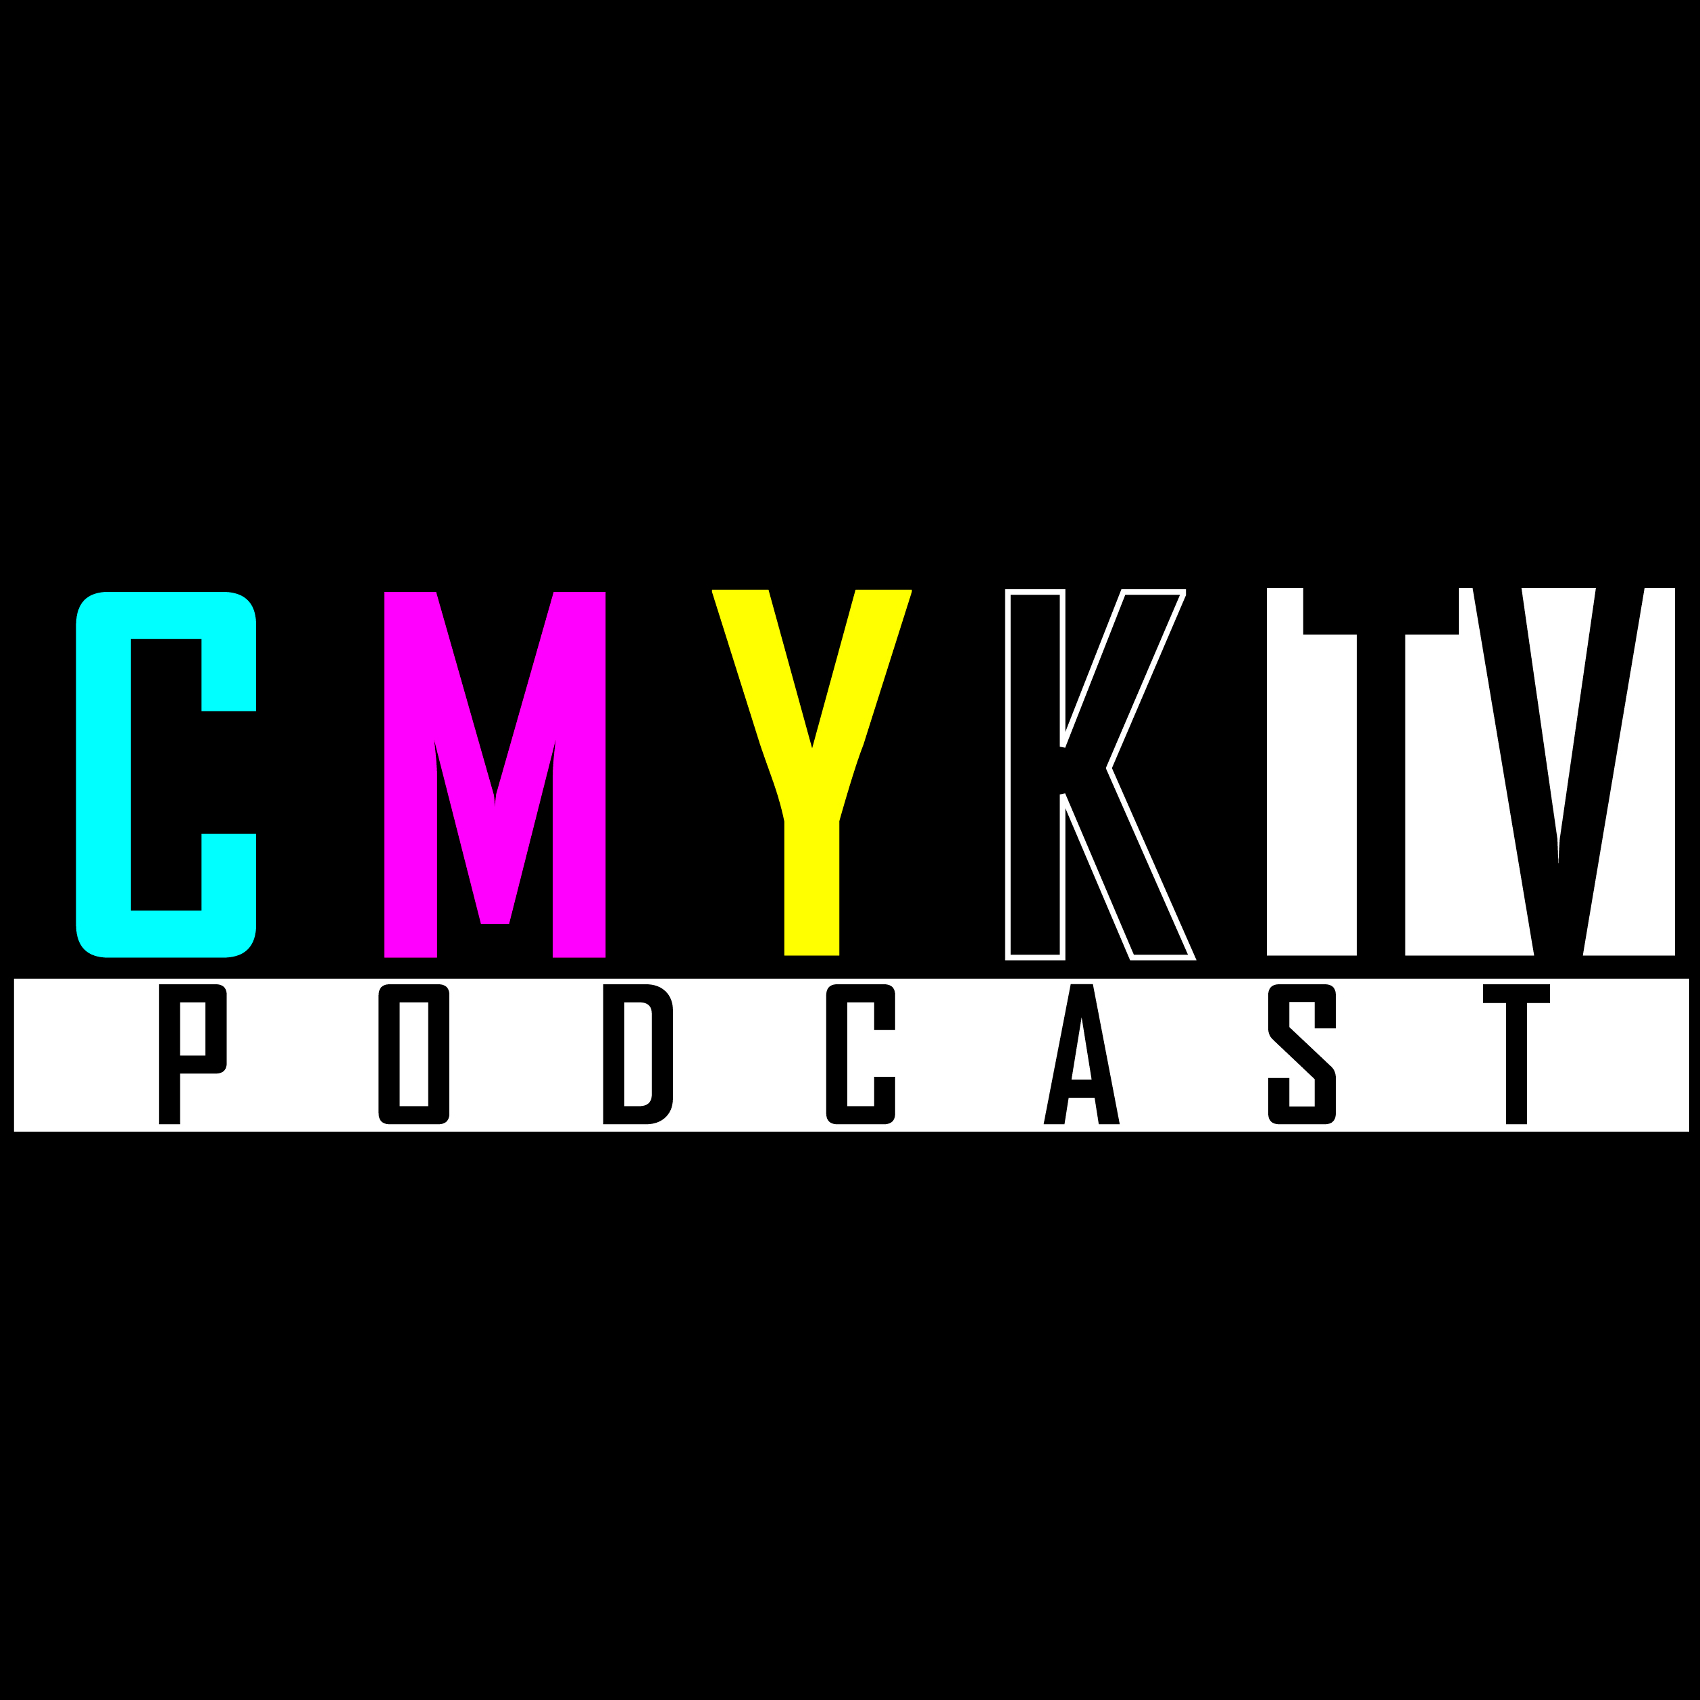 CMYK TV Podcast